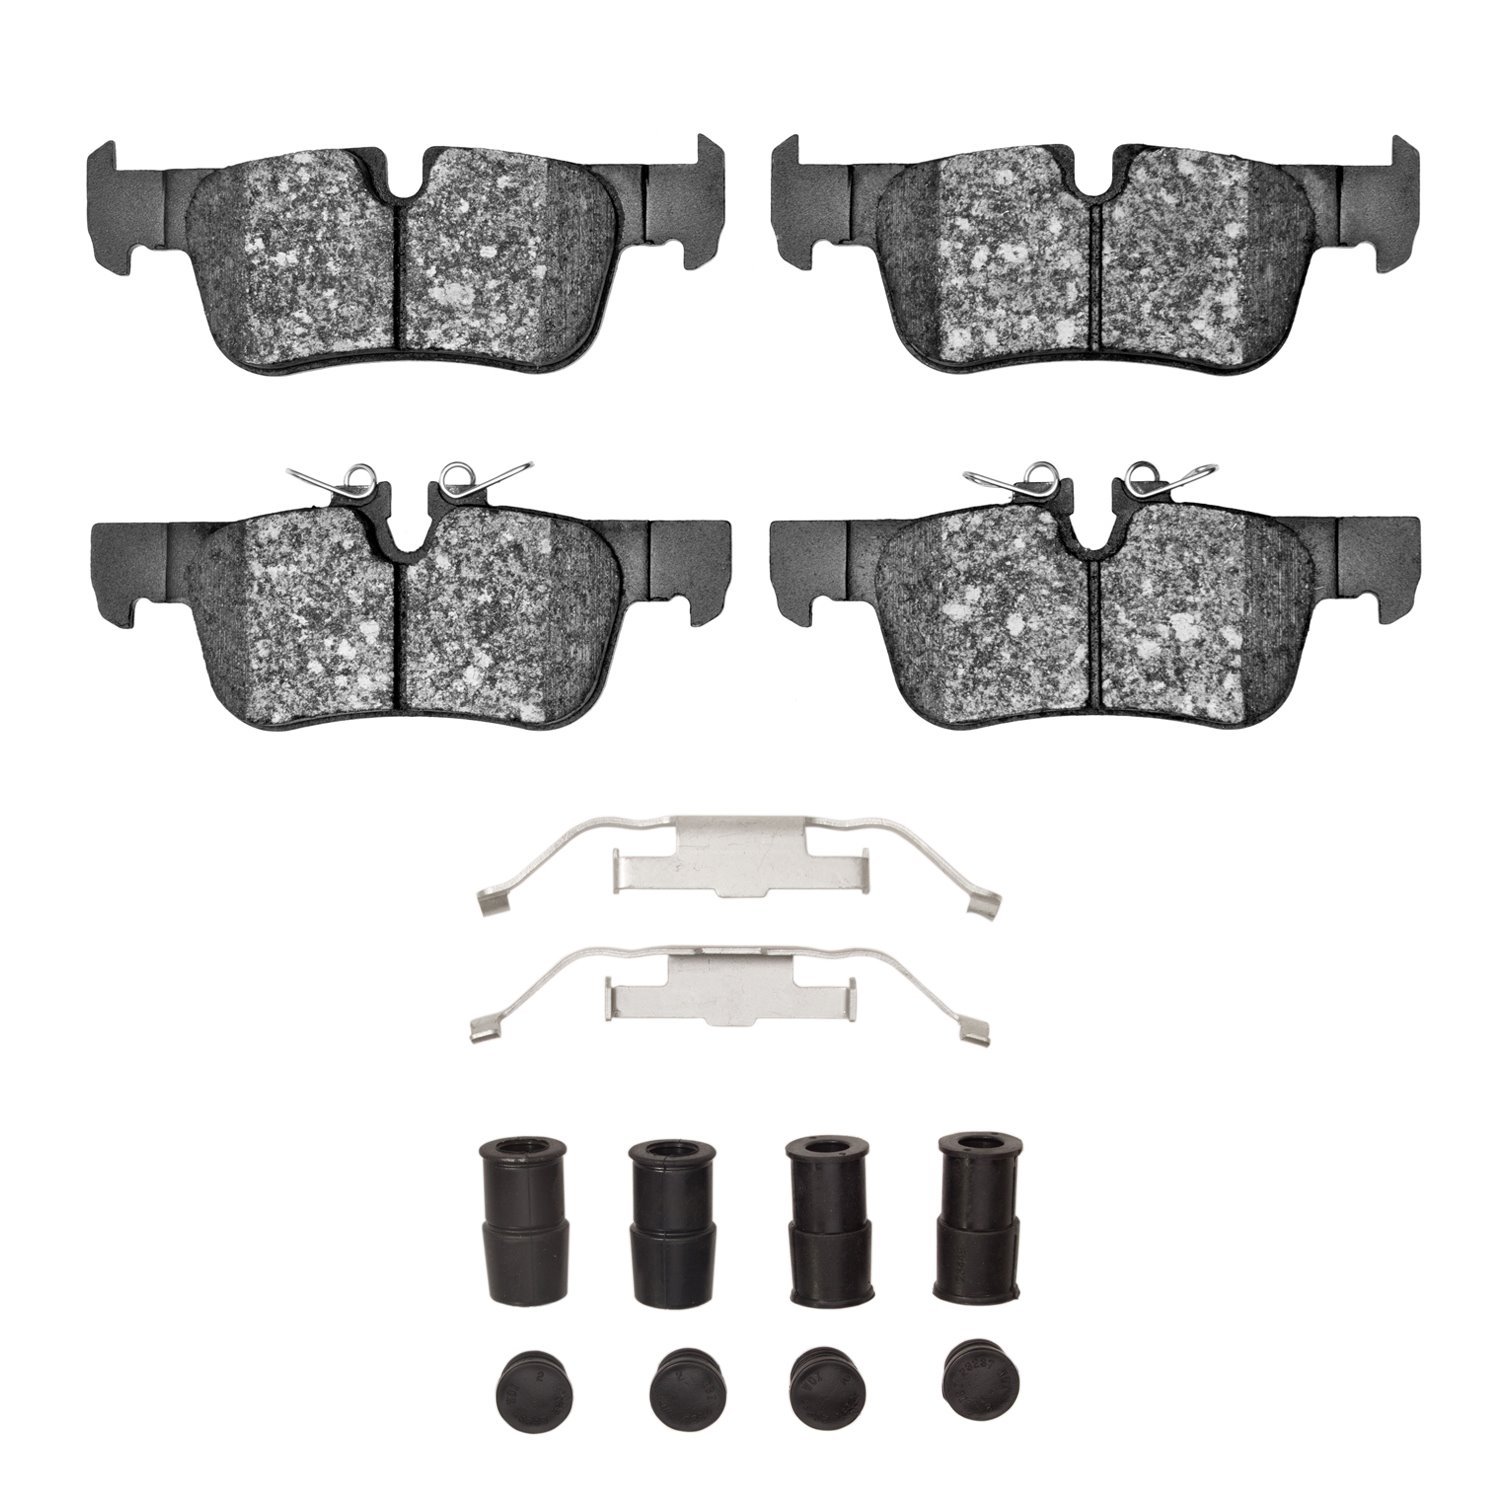 1600-1762-01 5000 Euro Ceramic Brake Pads & Hardware Kit, Fits Select Multiple Makes/Models, Position: Rear